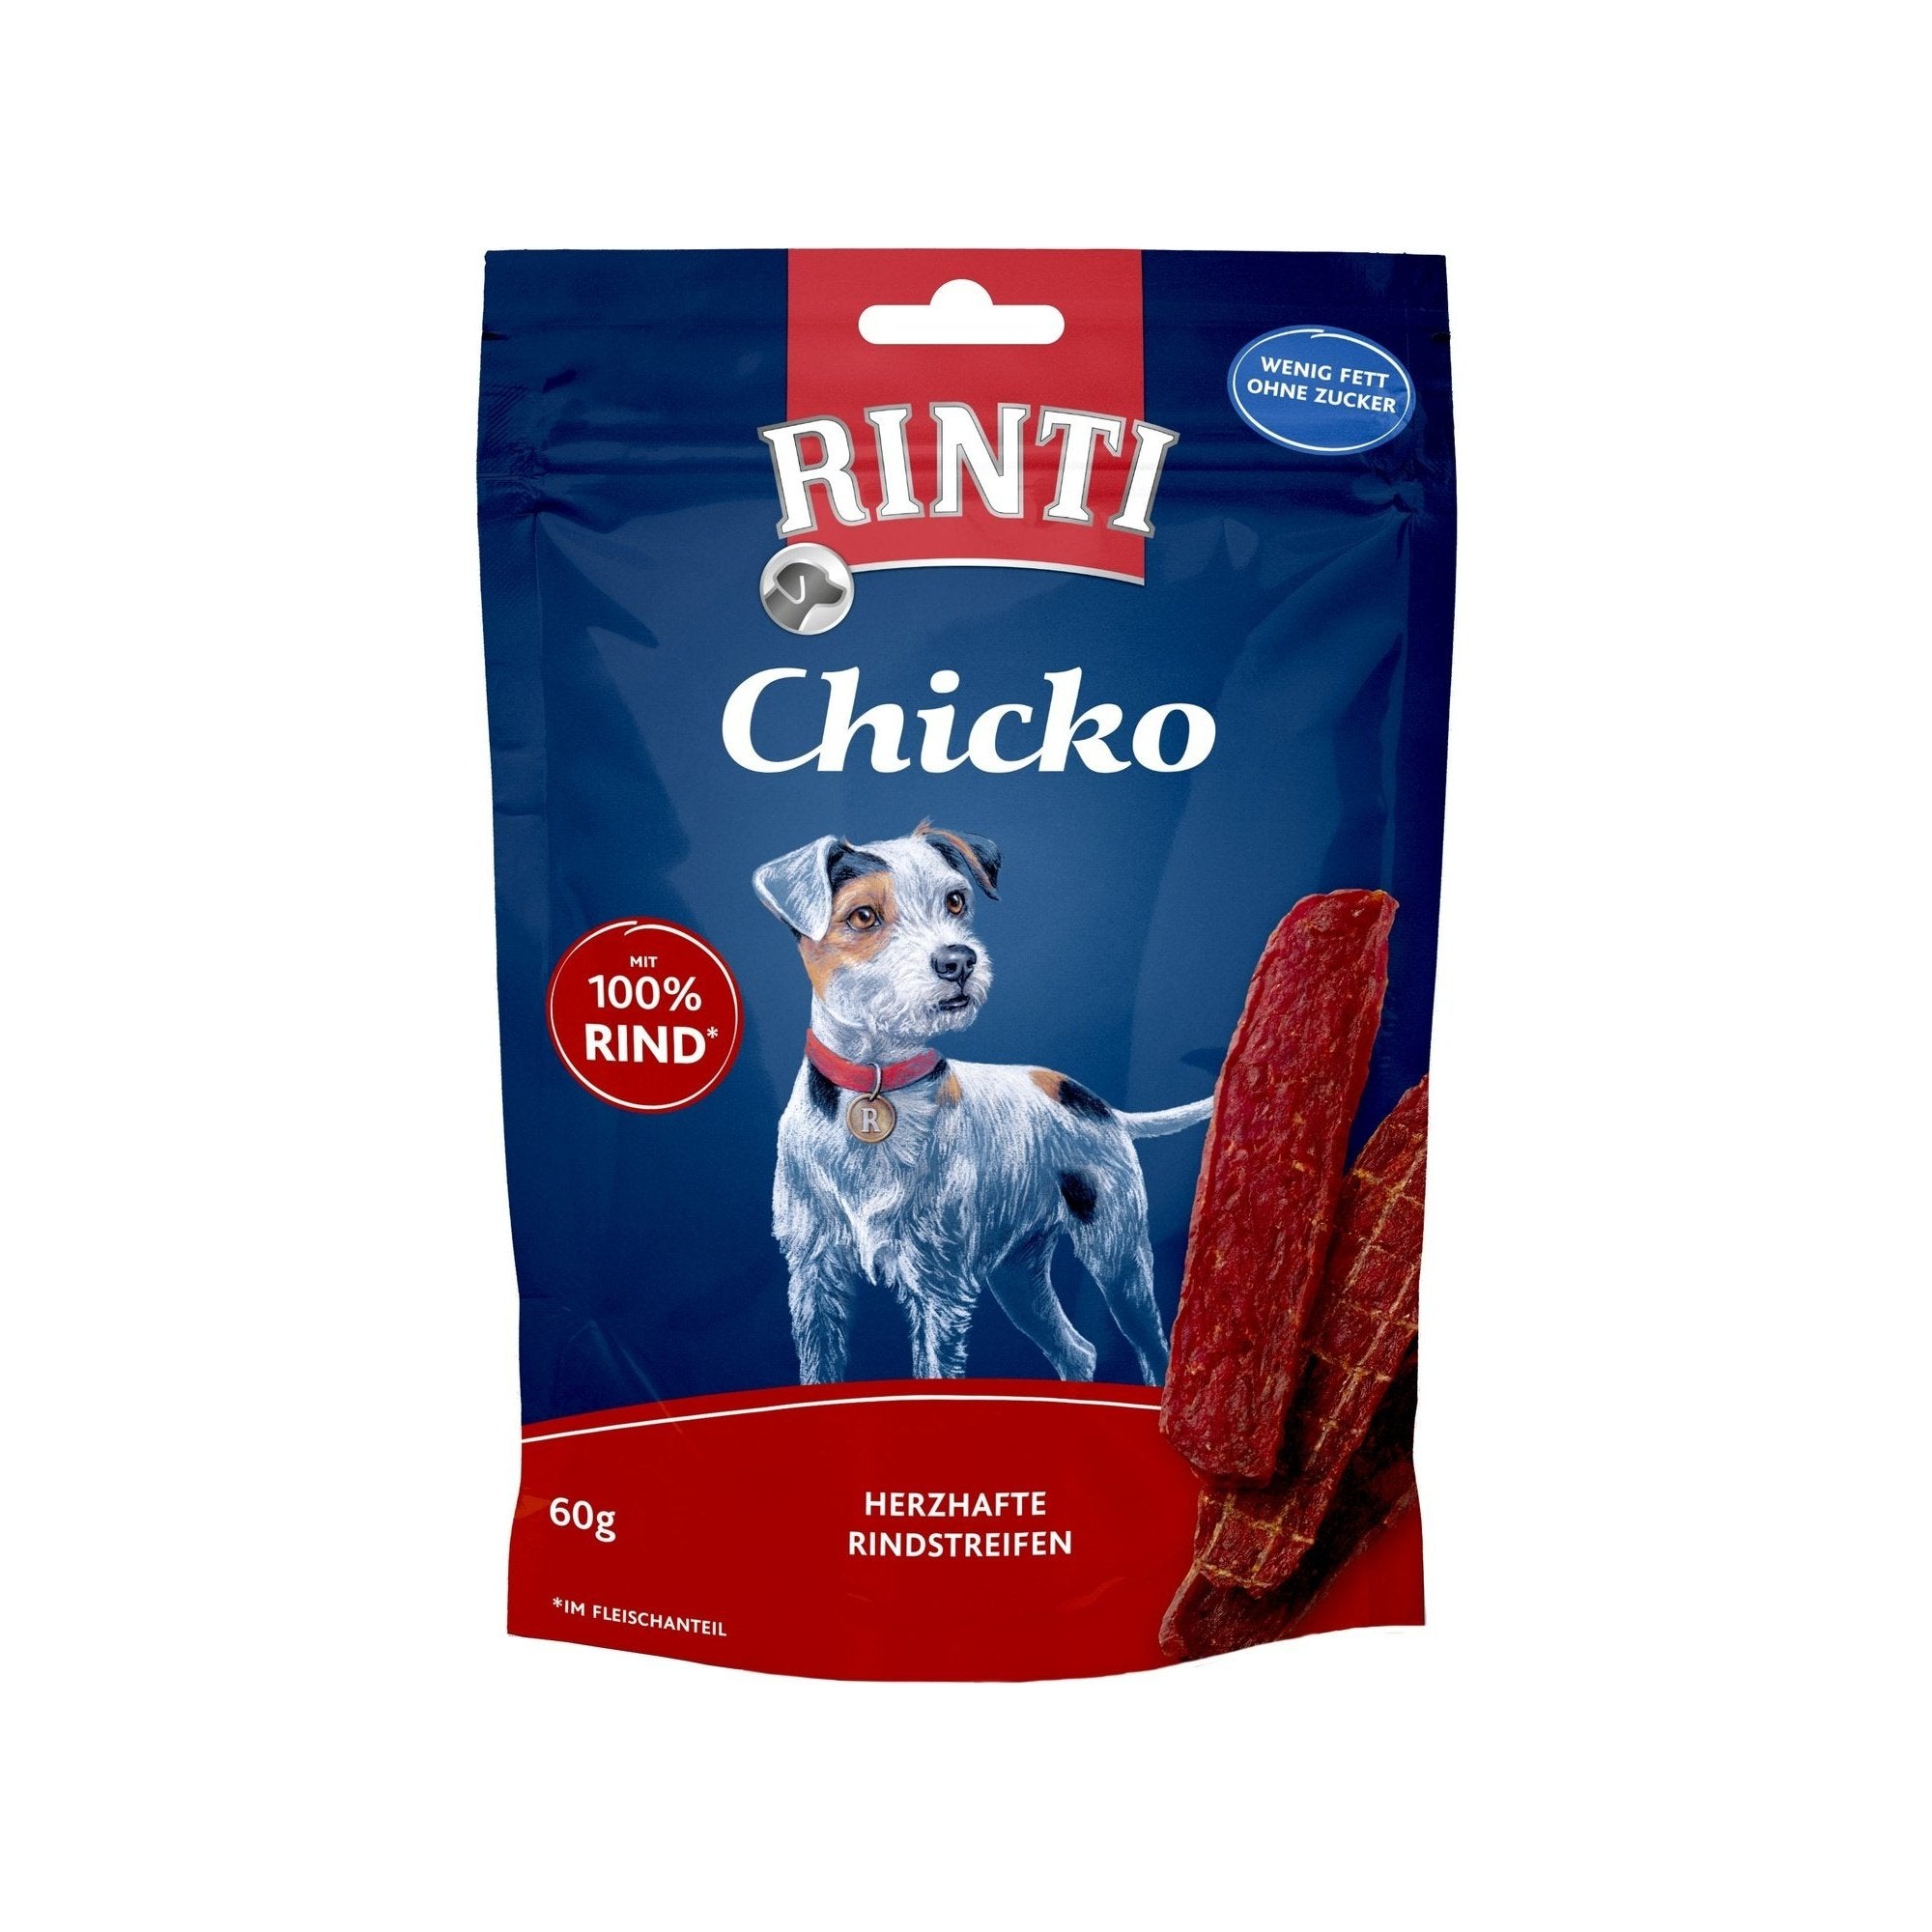 Rinti Snack Chicko Rind - zoo.de